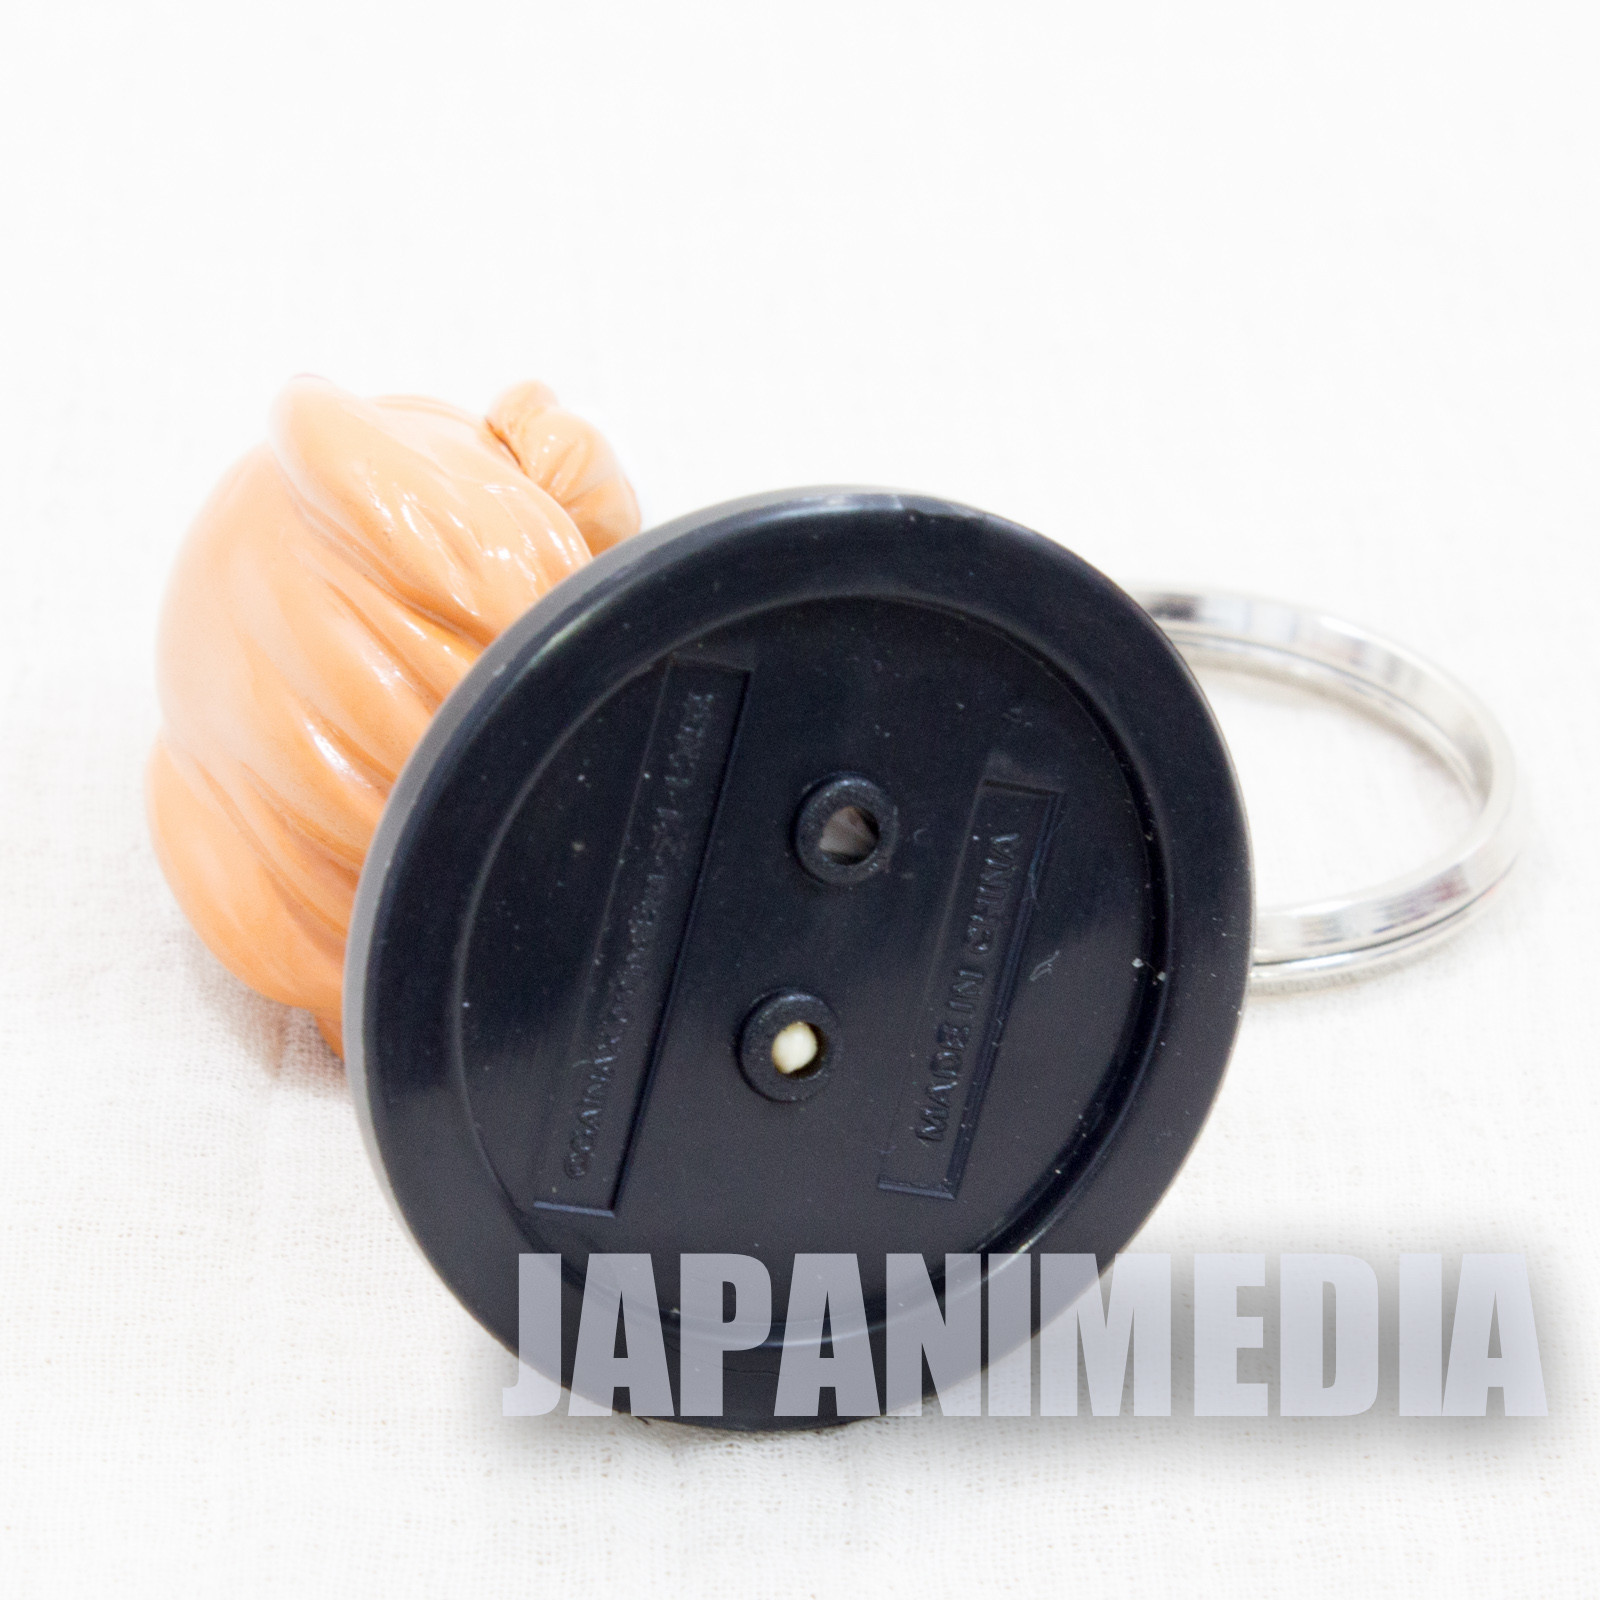 Evangelion Asuka Langley Sohryu Swim Suit Figure Key Chain SEGA JAPAN ANIME